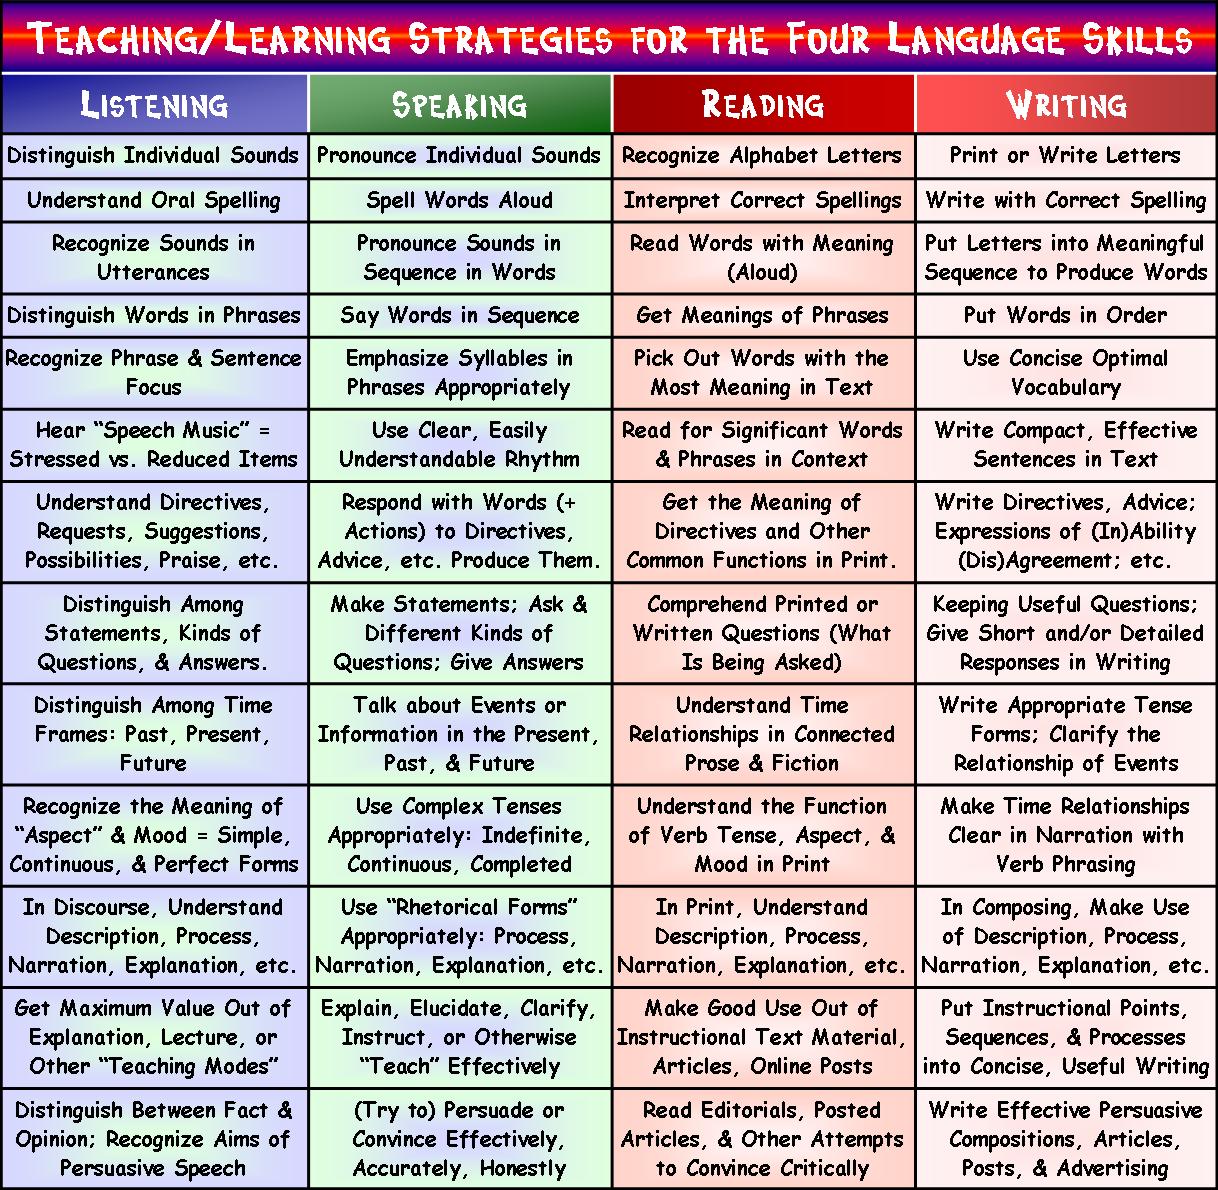 Strategies Teaching Grammar English Language Learners